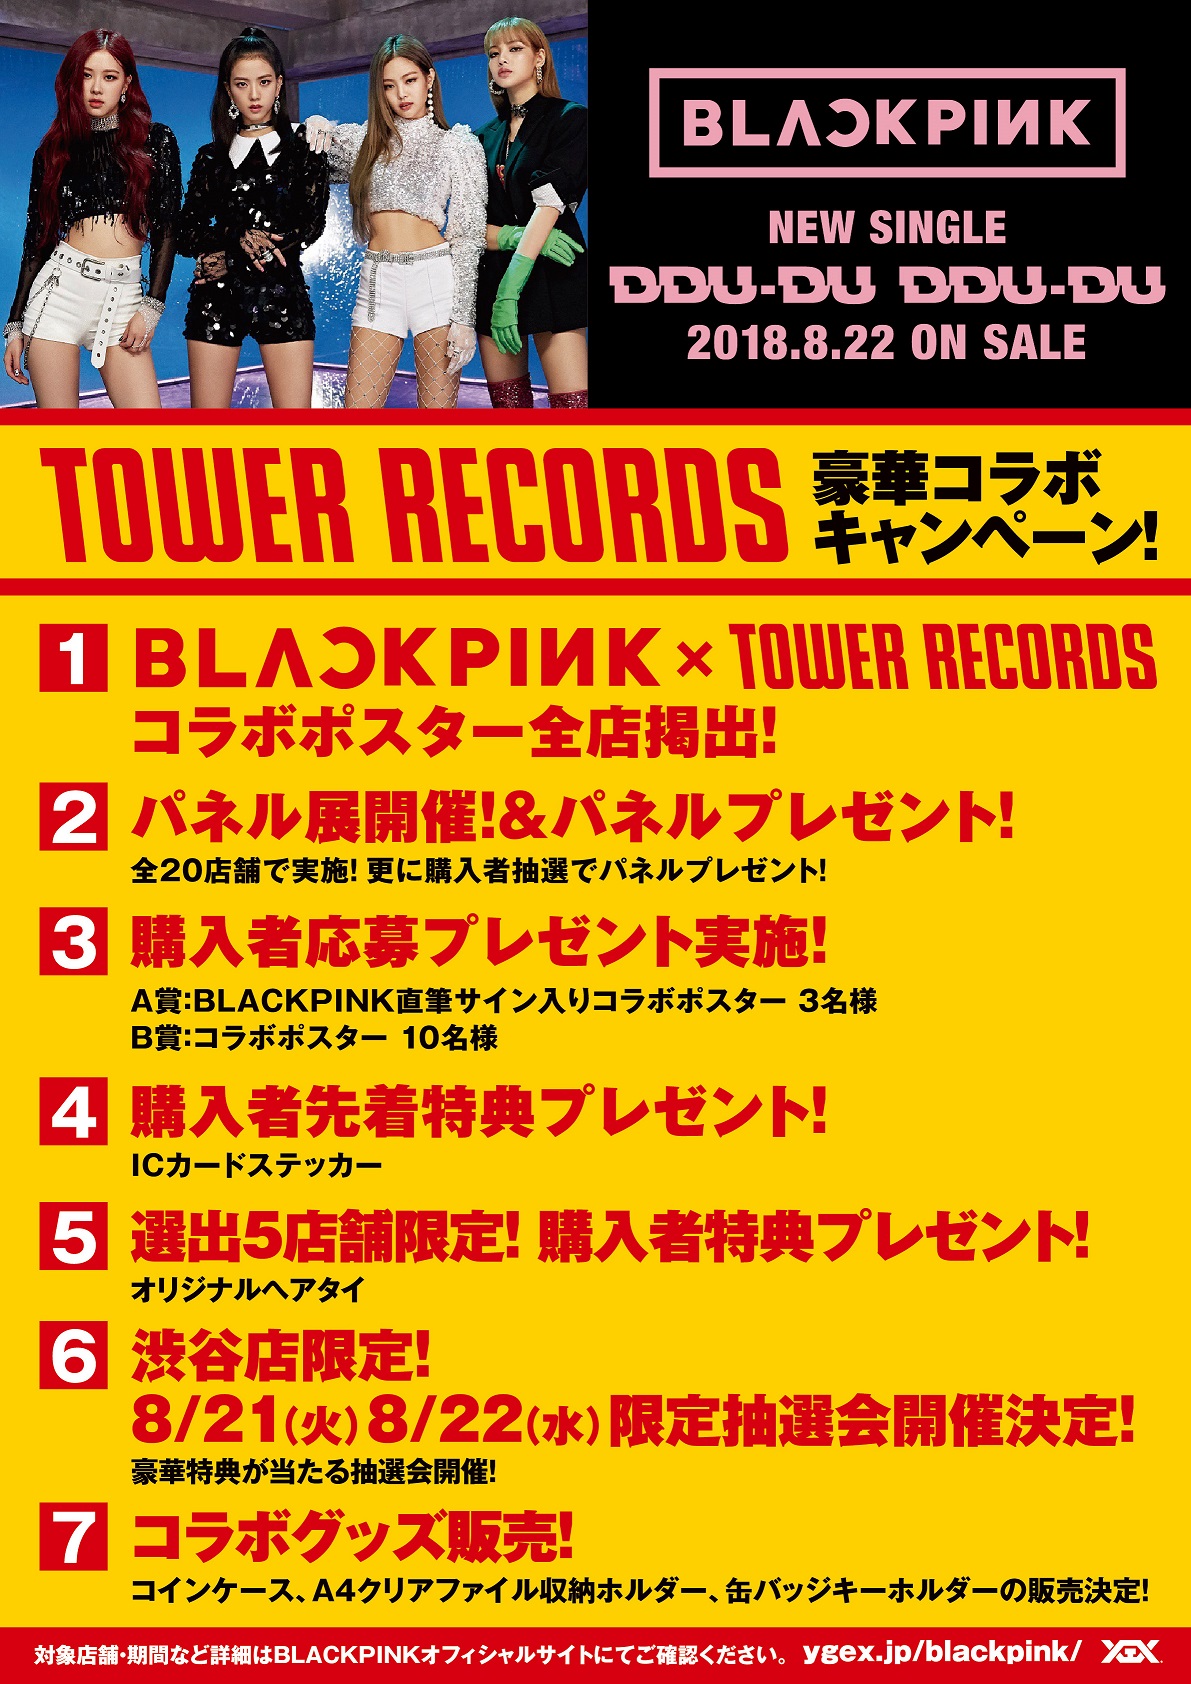 BLACKPINK × TOWER RECORDS】8/22(水)発売『DDU-DU DDU-DU』リリース